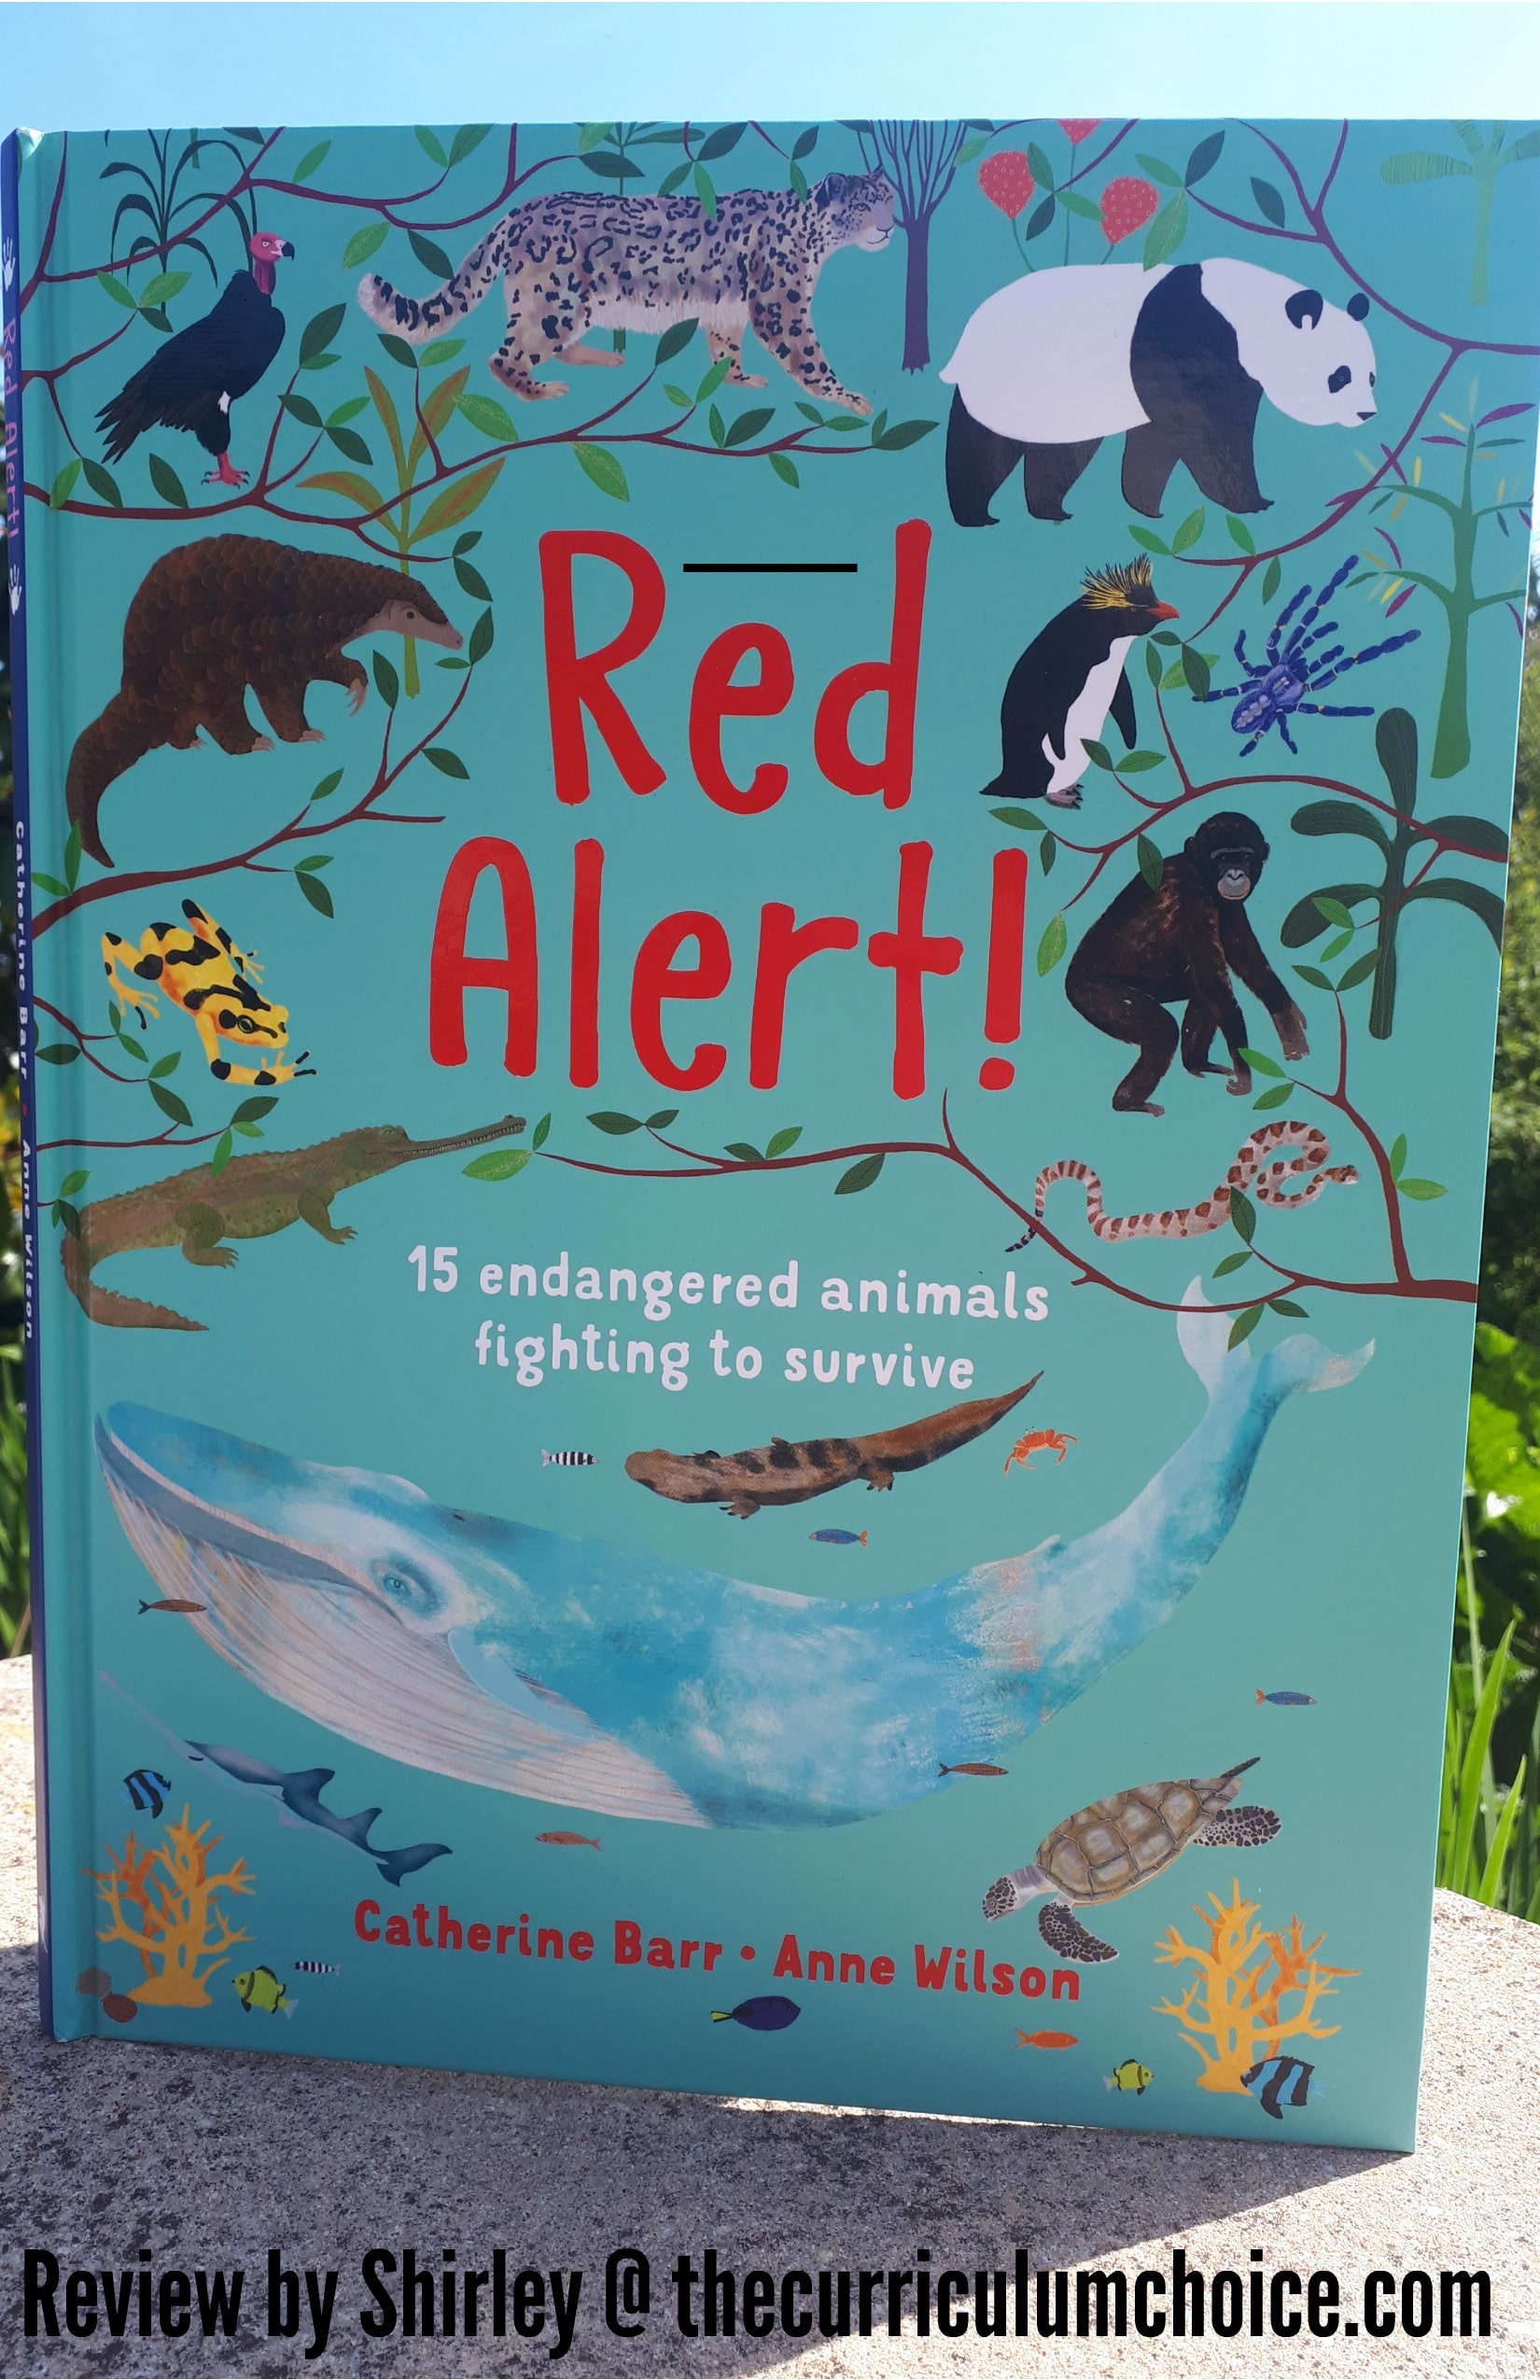 Red Alert! 15 Endangered Animals Fighting to Survive